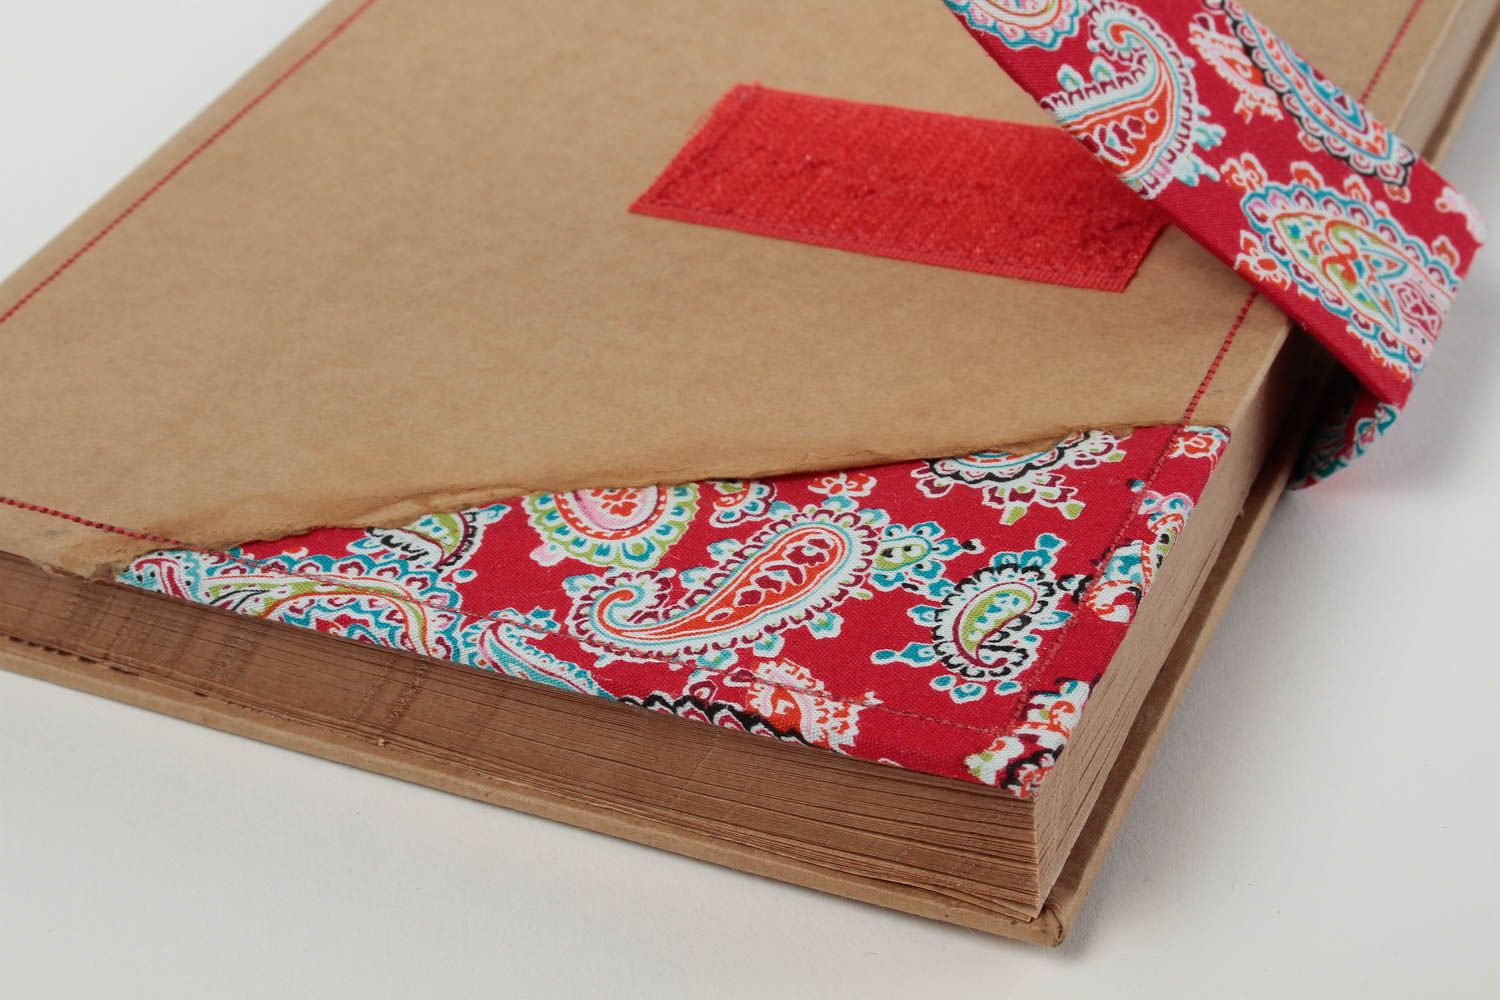 Stylish handmade notebook design scrapbook designs stationery ideas small gifts photo 2